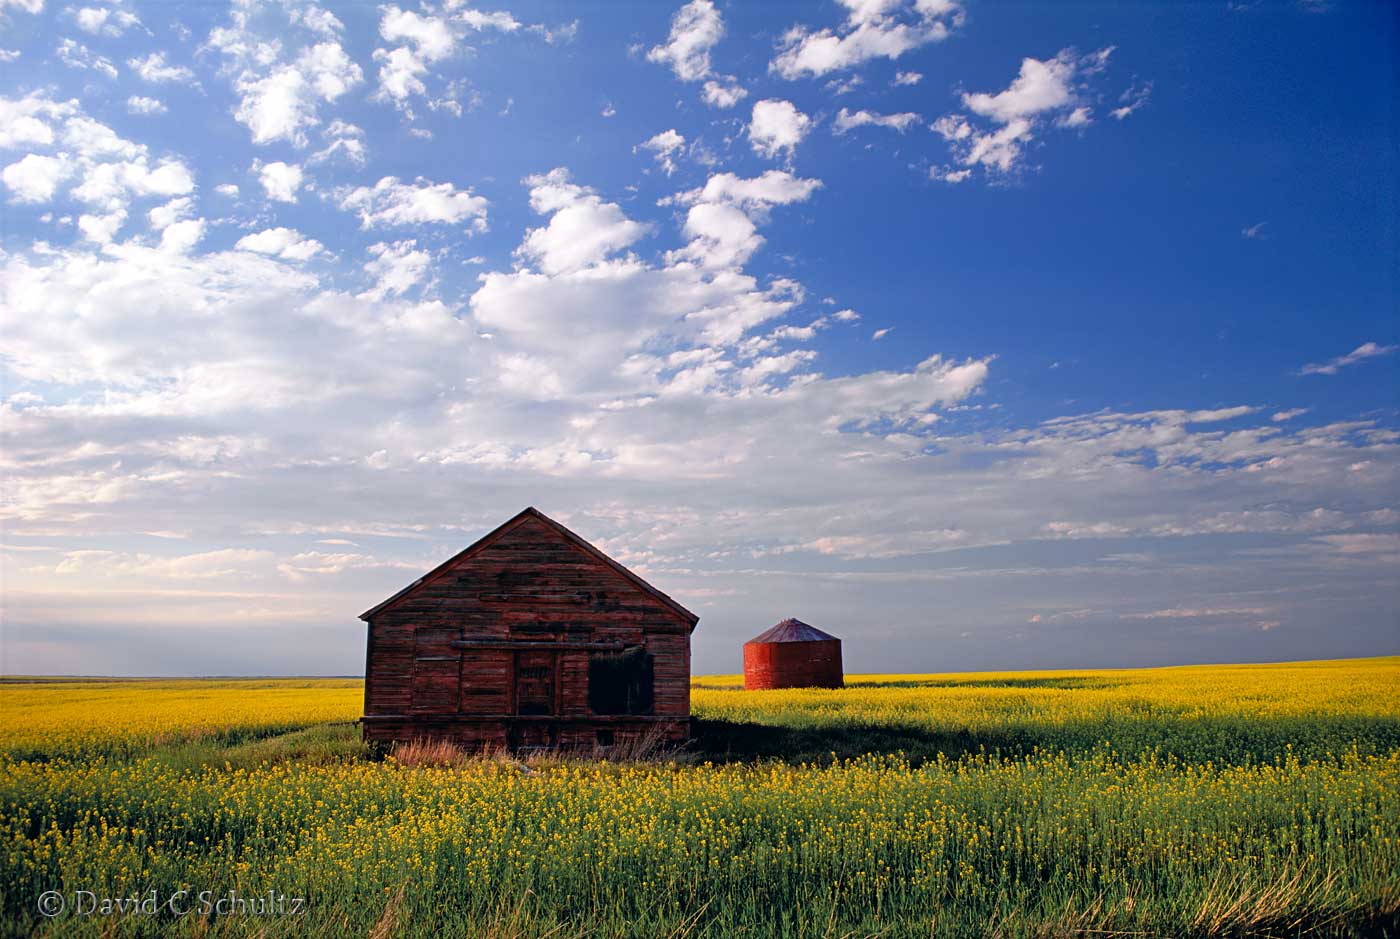 cCanola field in bloom in Alberta, Canada - Image #7-1245